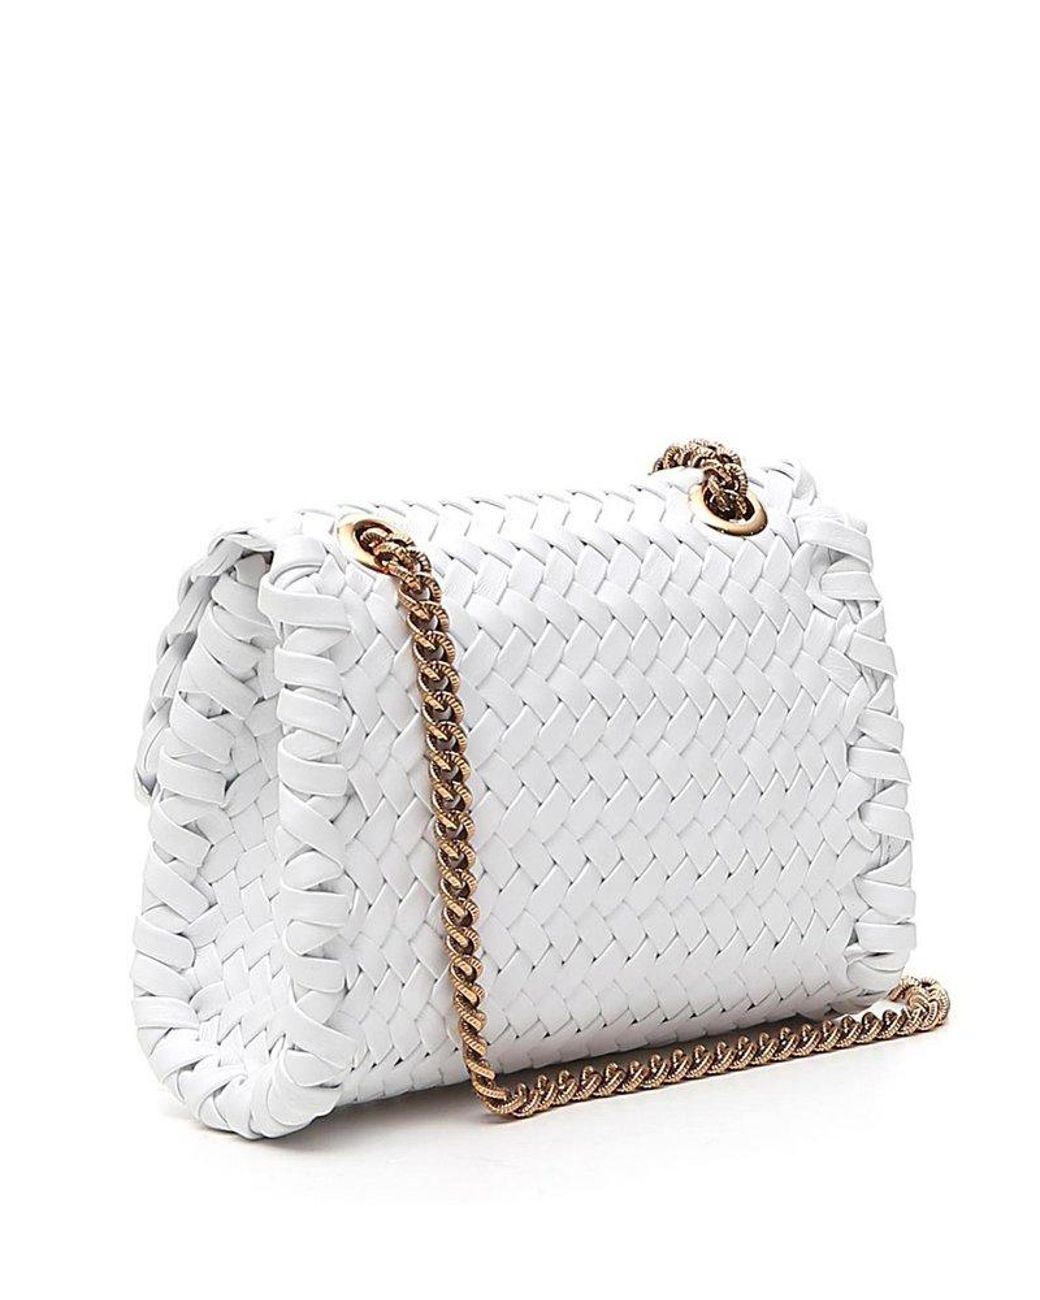 Dolce & Gabbana Devotion Woven Small Shoulder Bag in White | Lyst